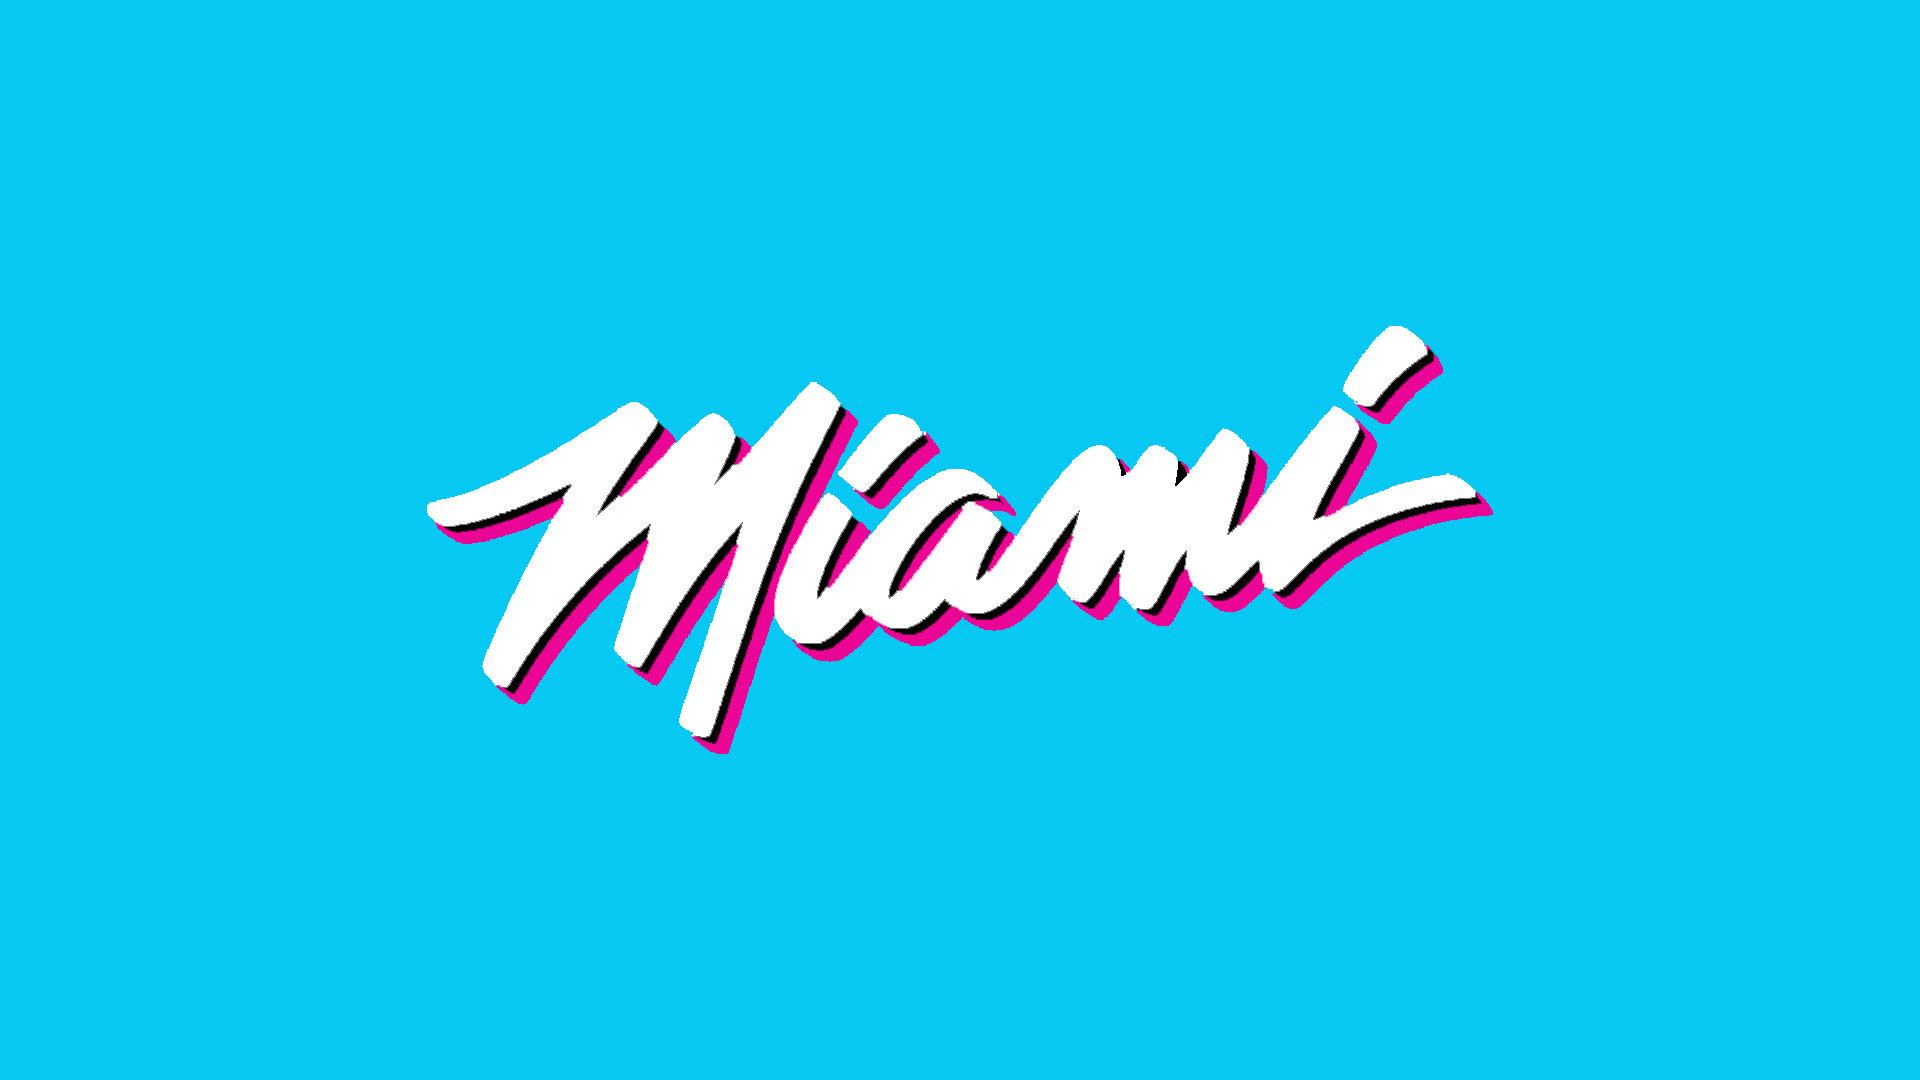 Miami vice fonts